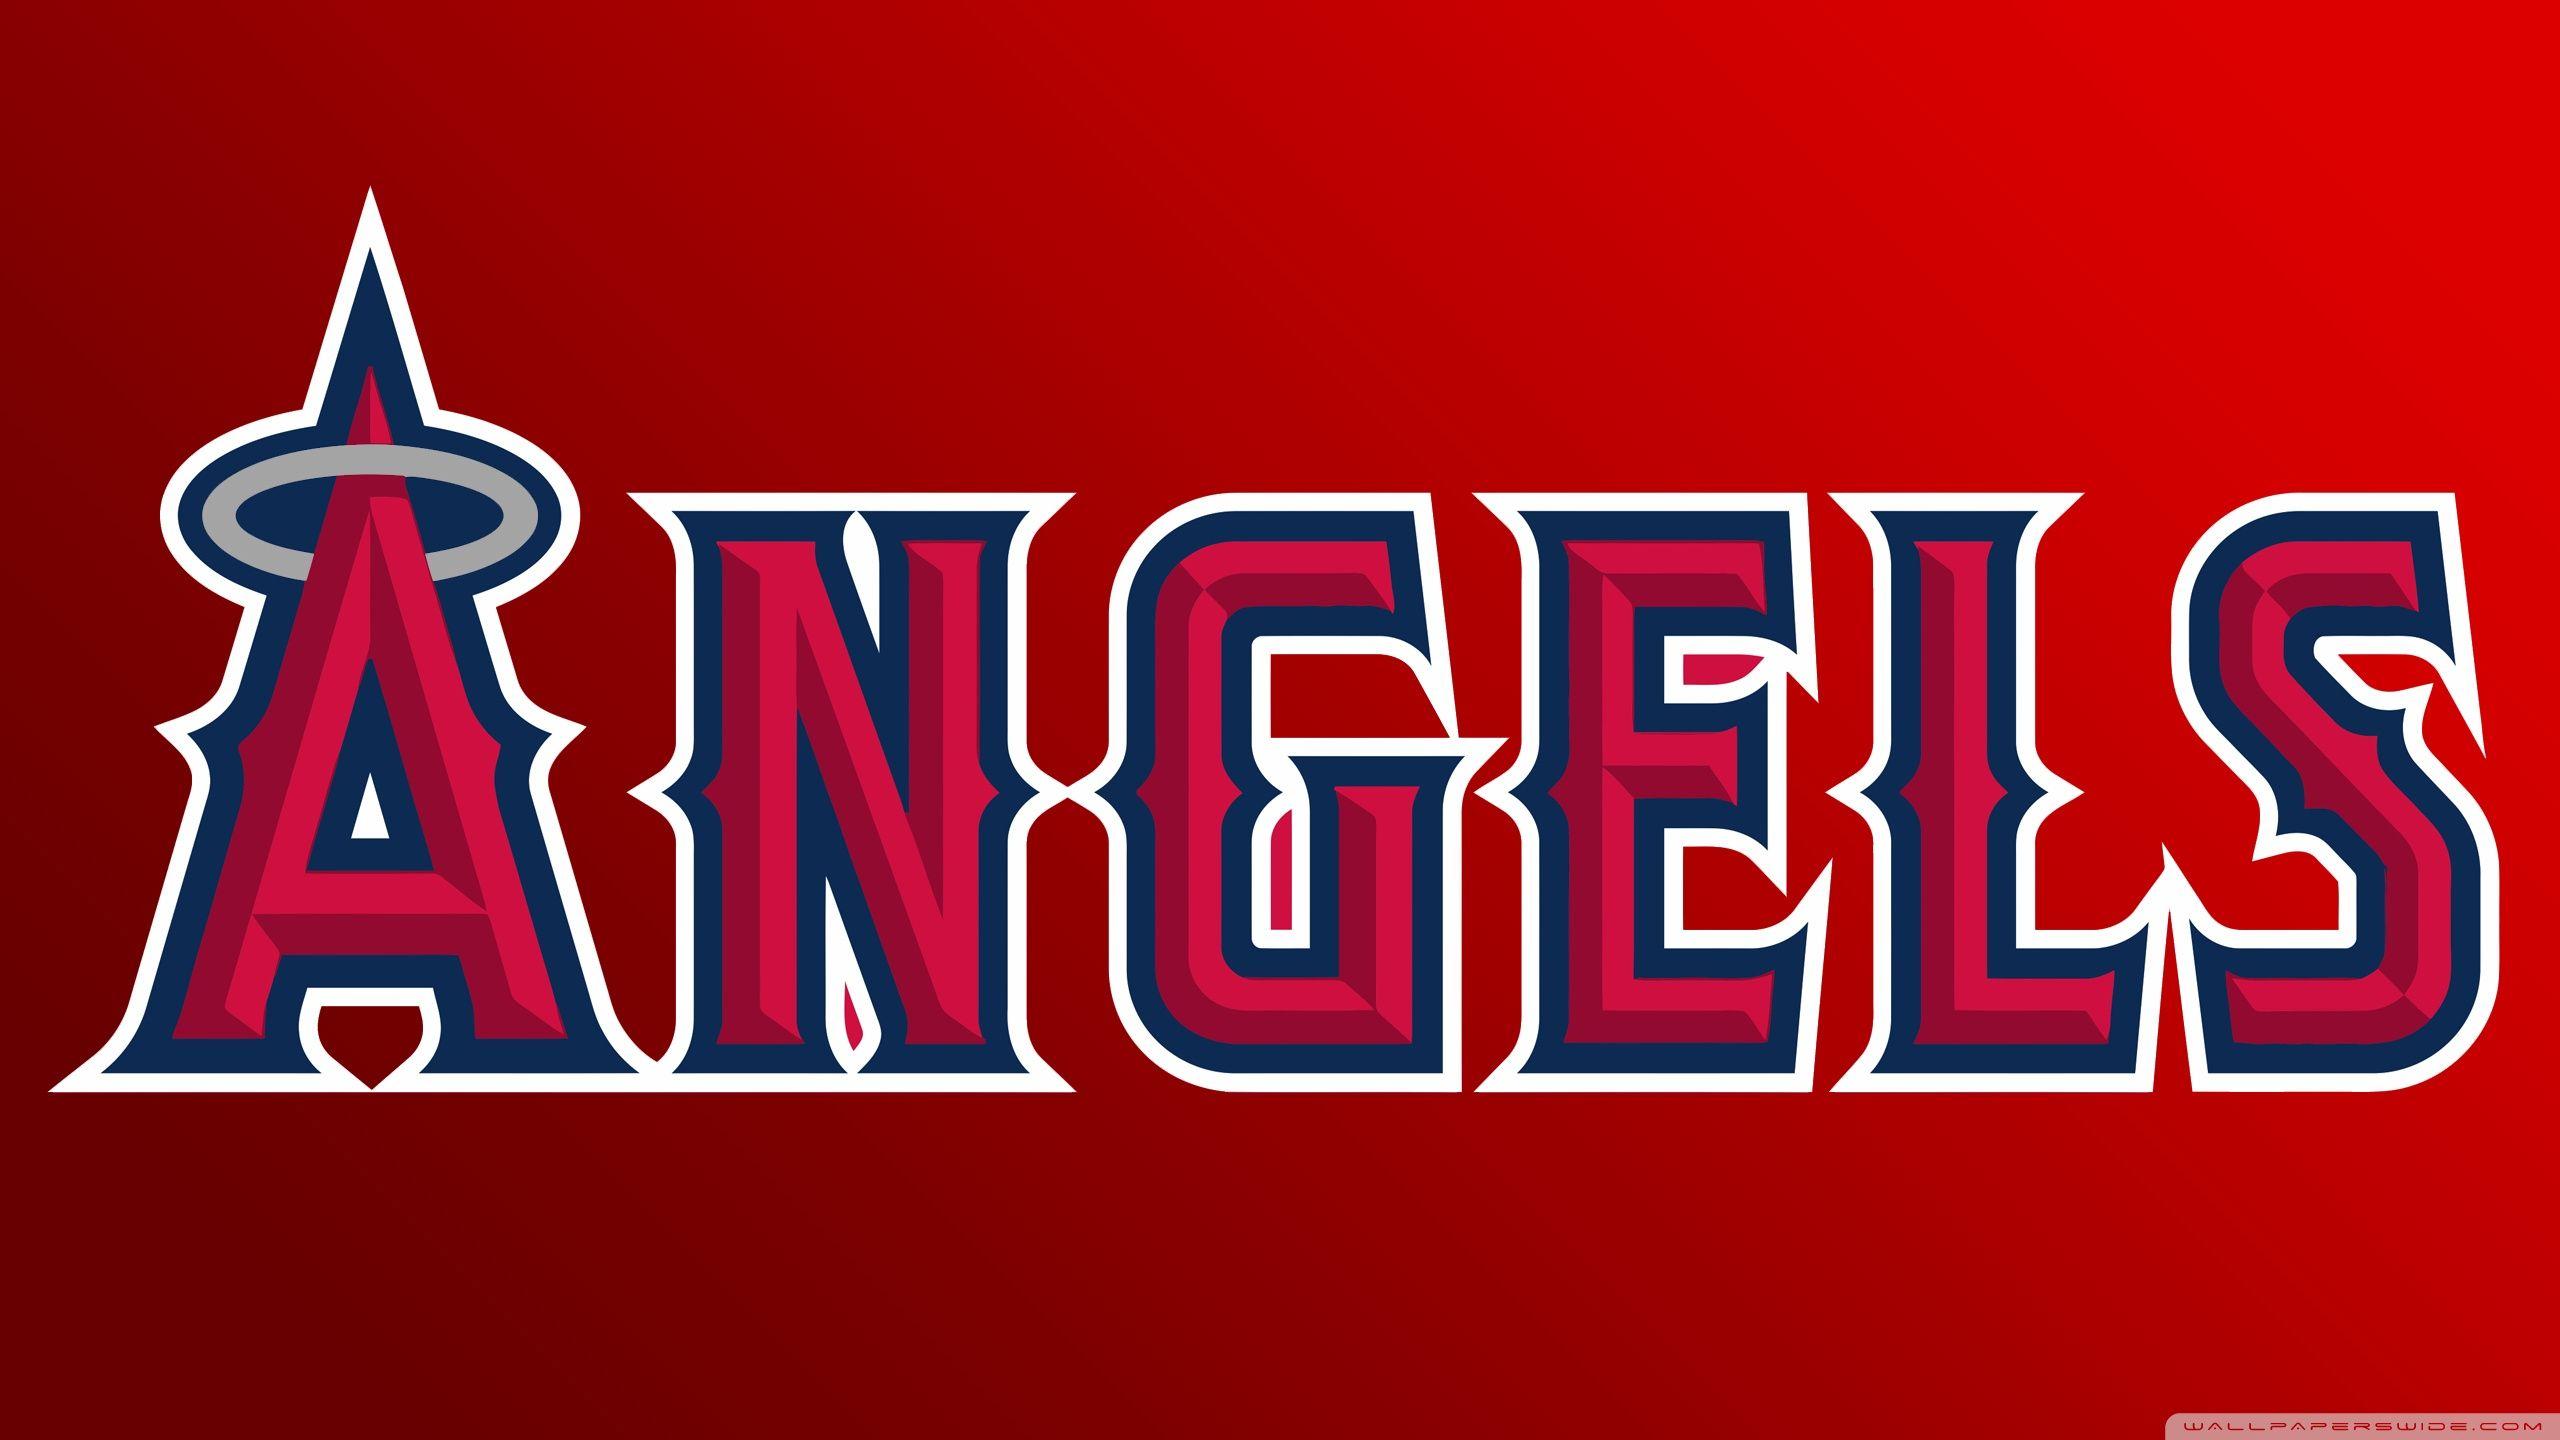 Angles Logo - Free Angels Baseball, Download Free Clip Art, Free Clip Art on ...